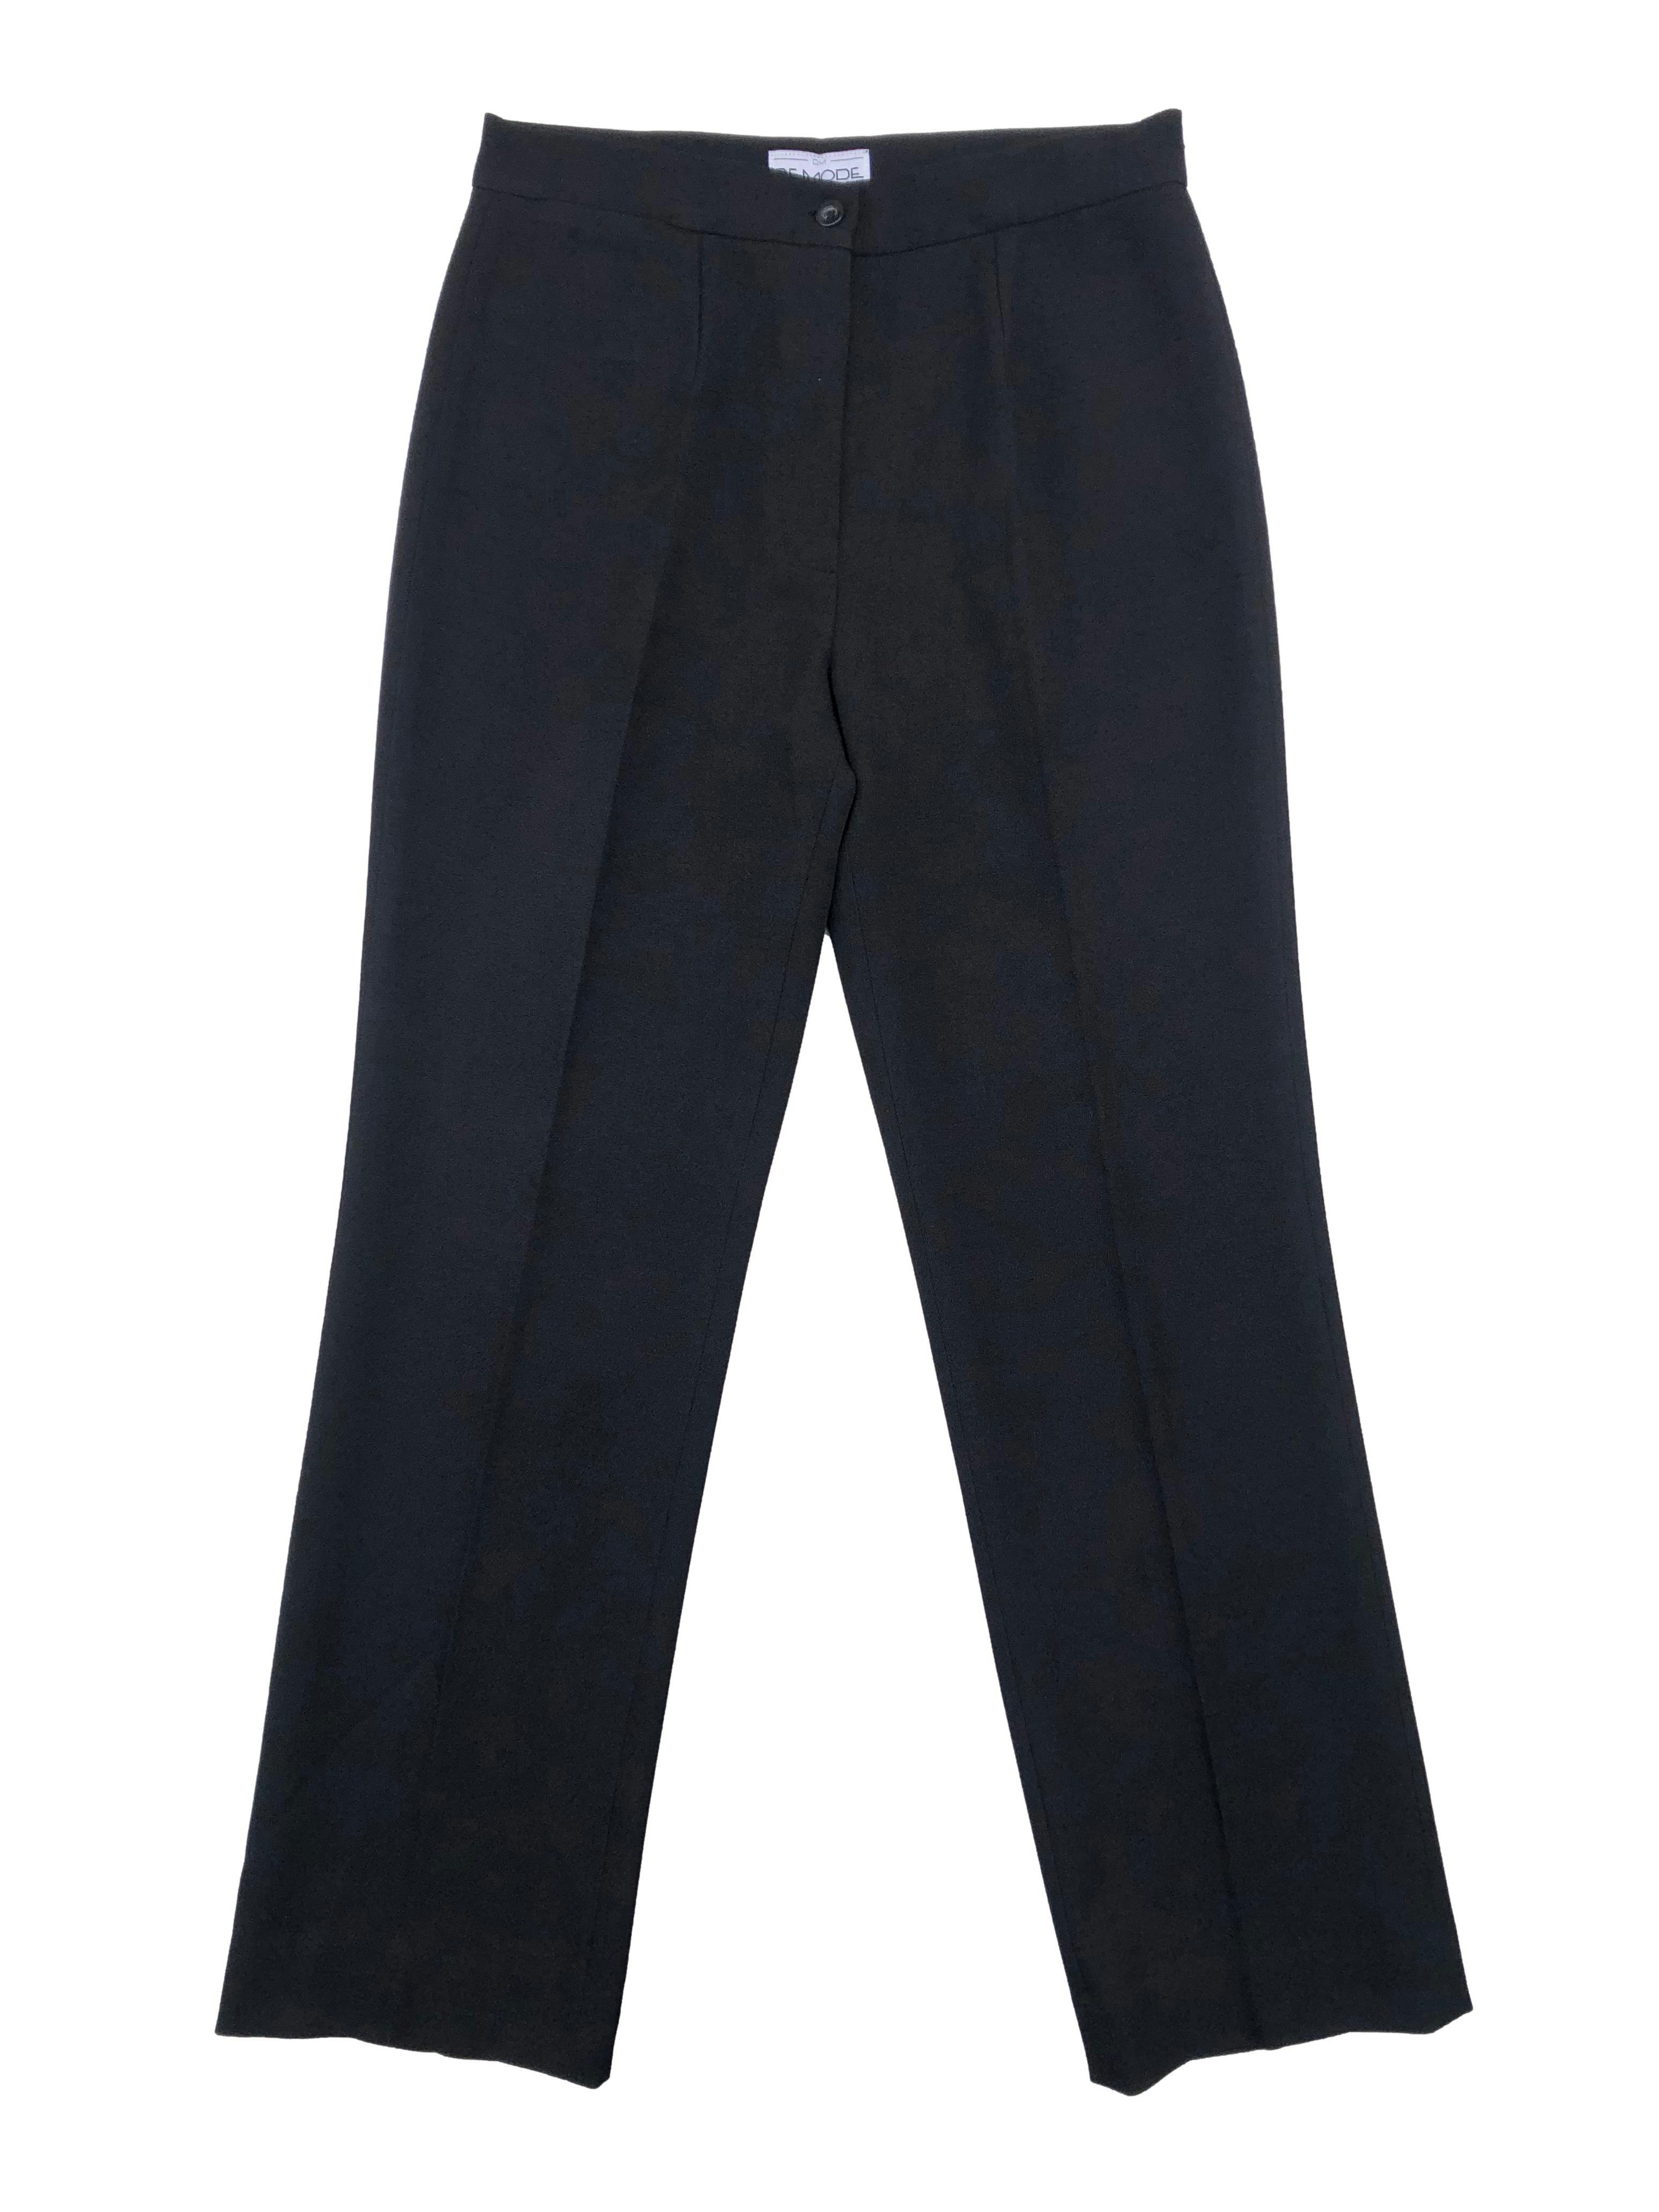 Pantalón formal negro con cierre botón y bolsillos secreto delantero, corte slim. Cintura 72cm Tiro 28cm Largo 98cm